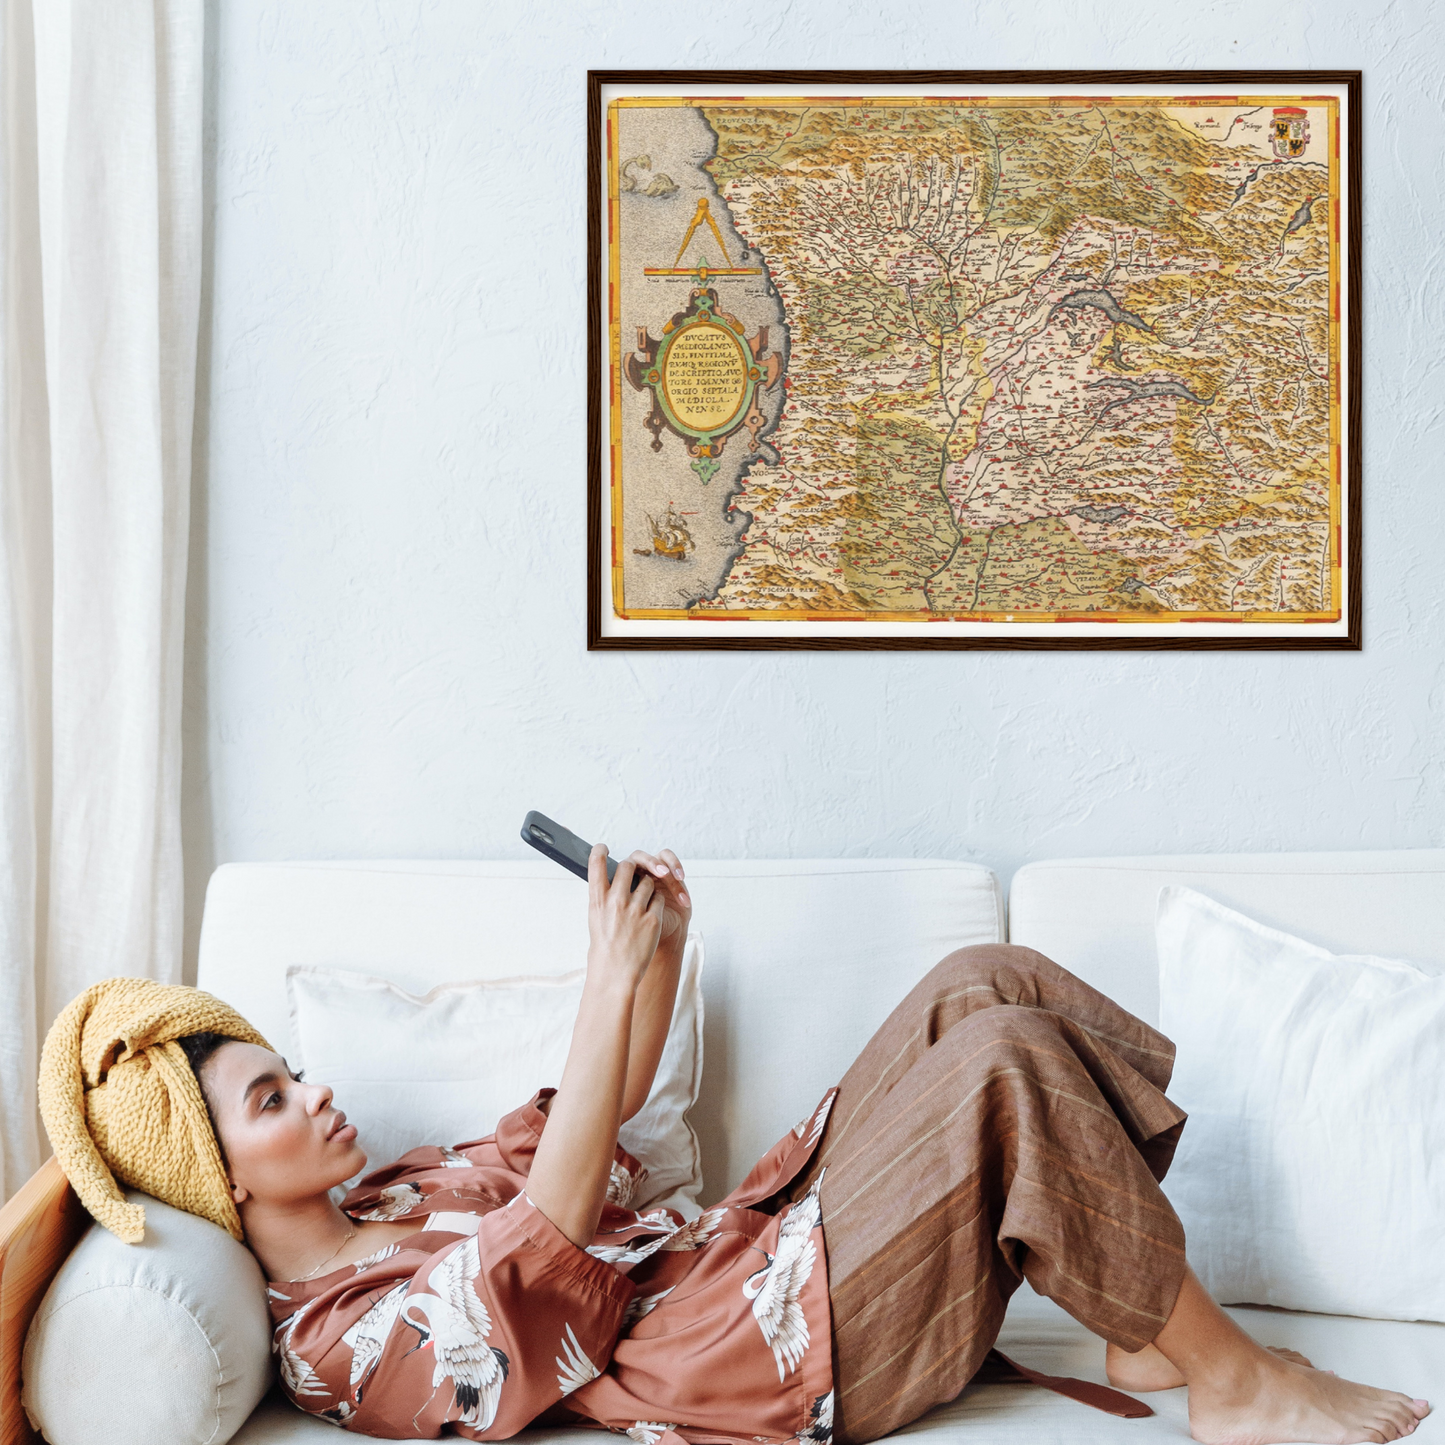 Historische Landkarte Lombardei um 1609